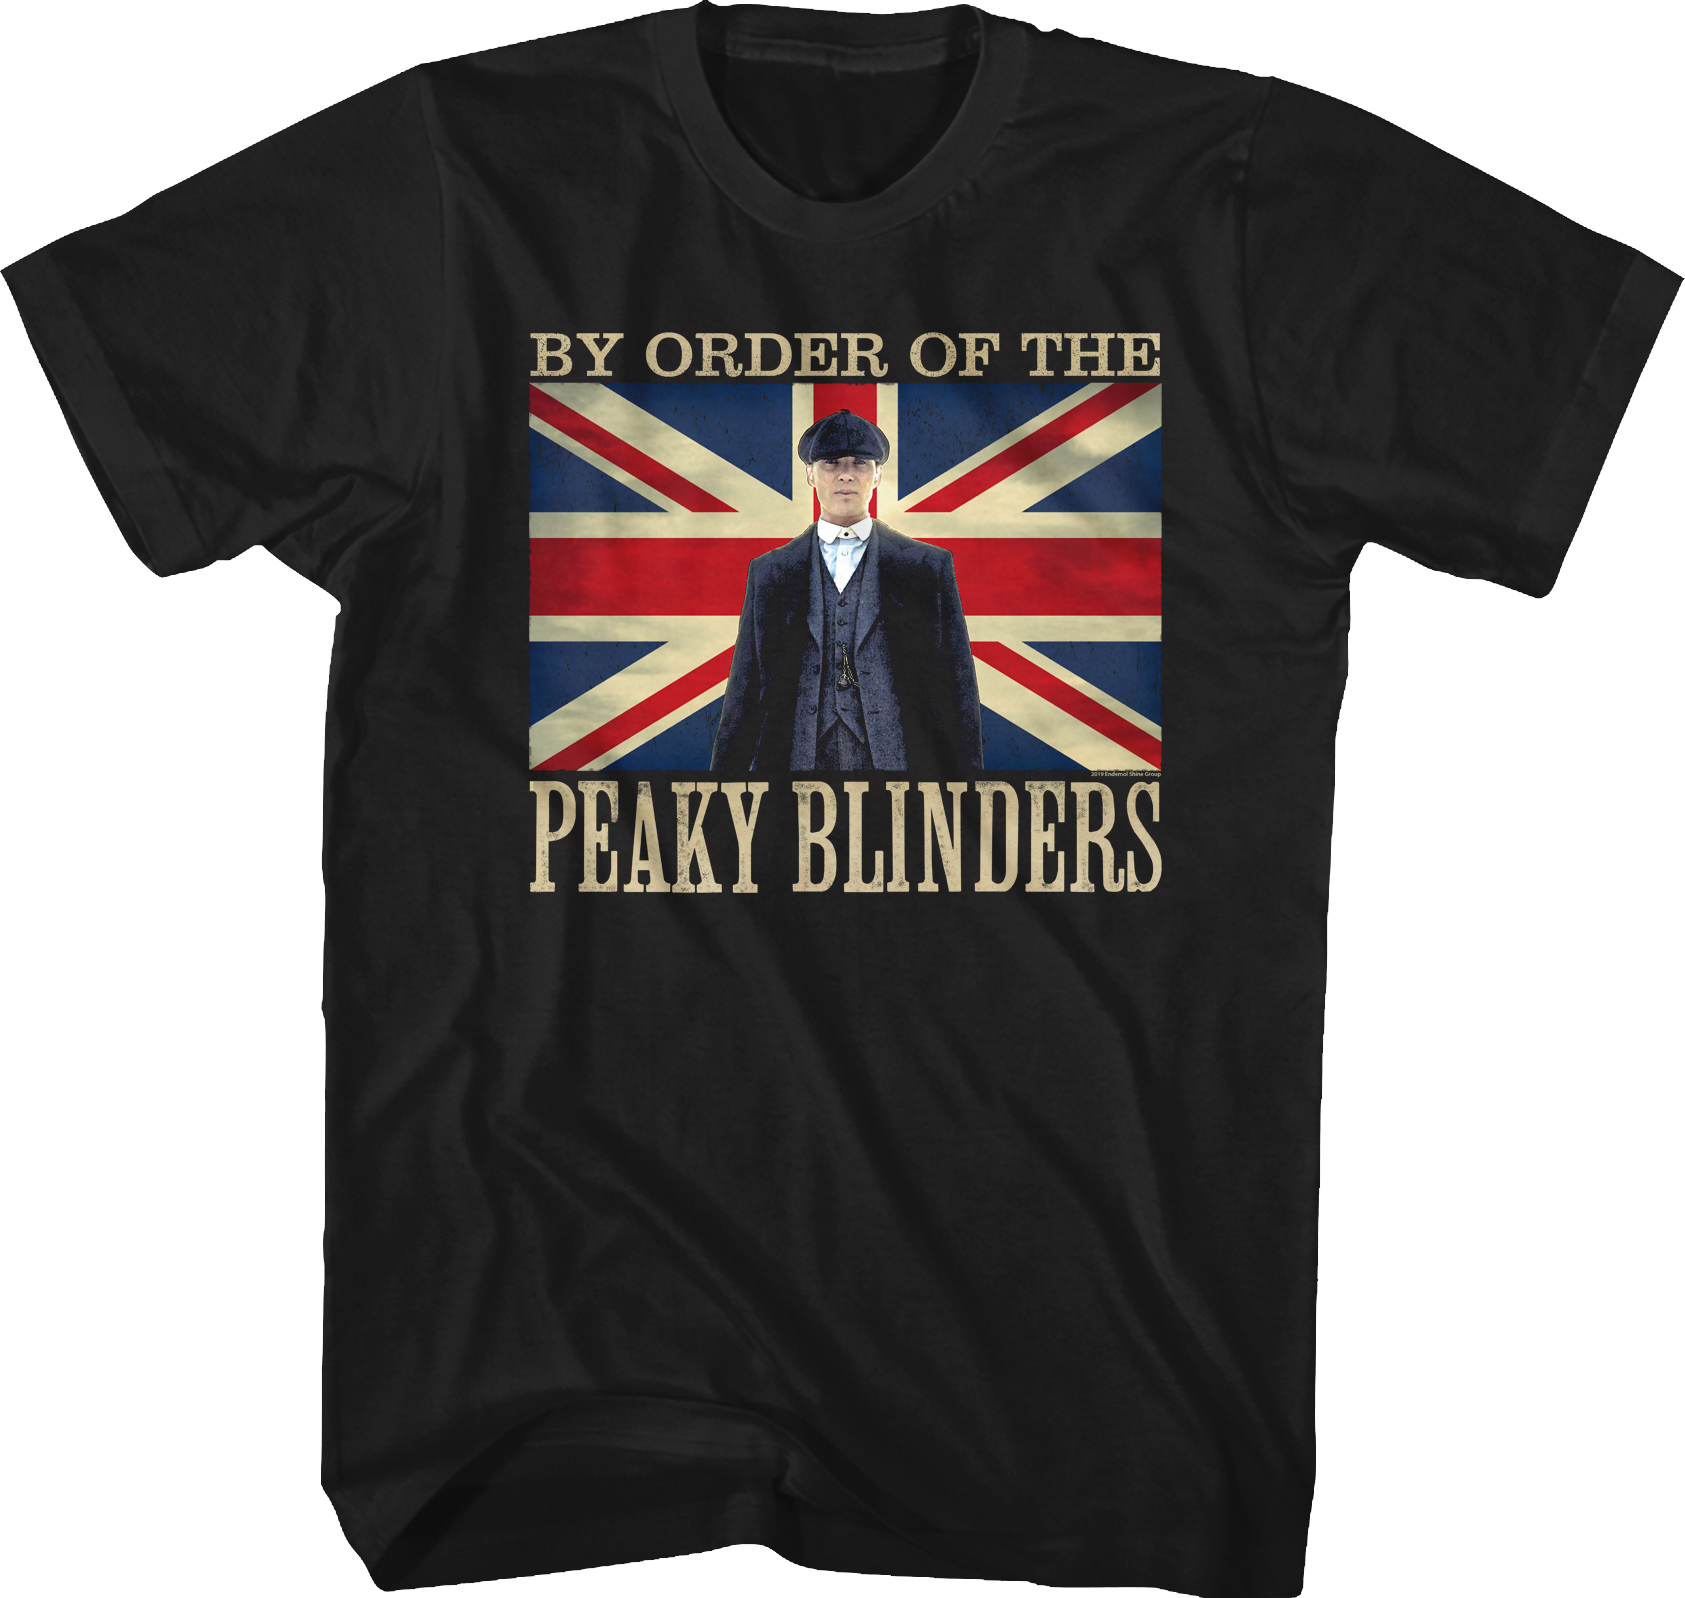 Union Jack Peaky Blinders T-Shirt